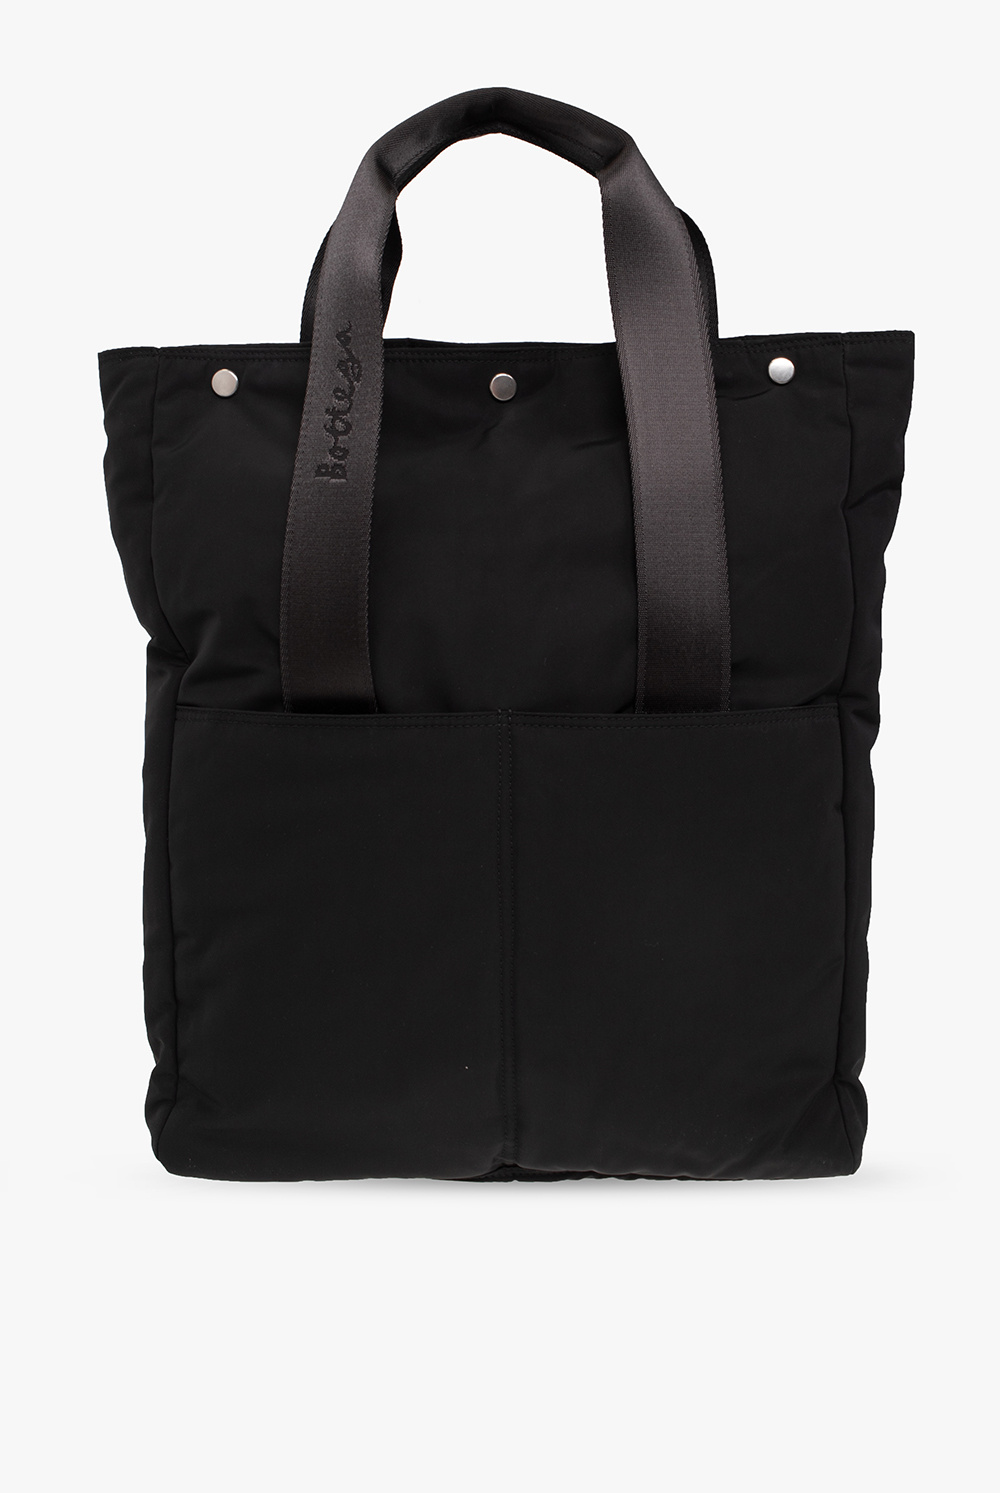 Bottega Veneta ‘Snap Medium’ shopper bag